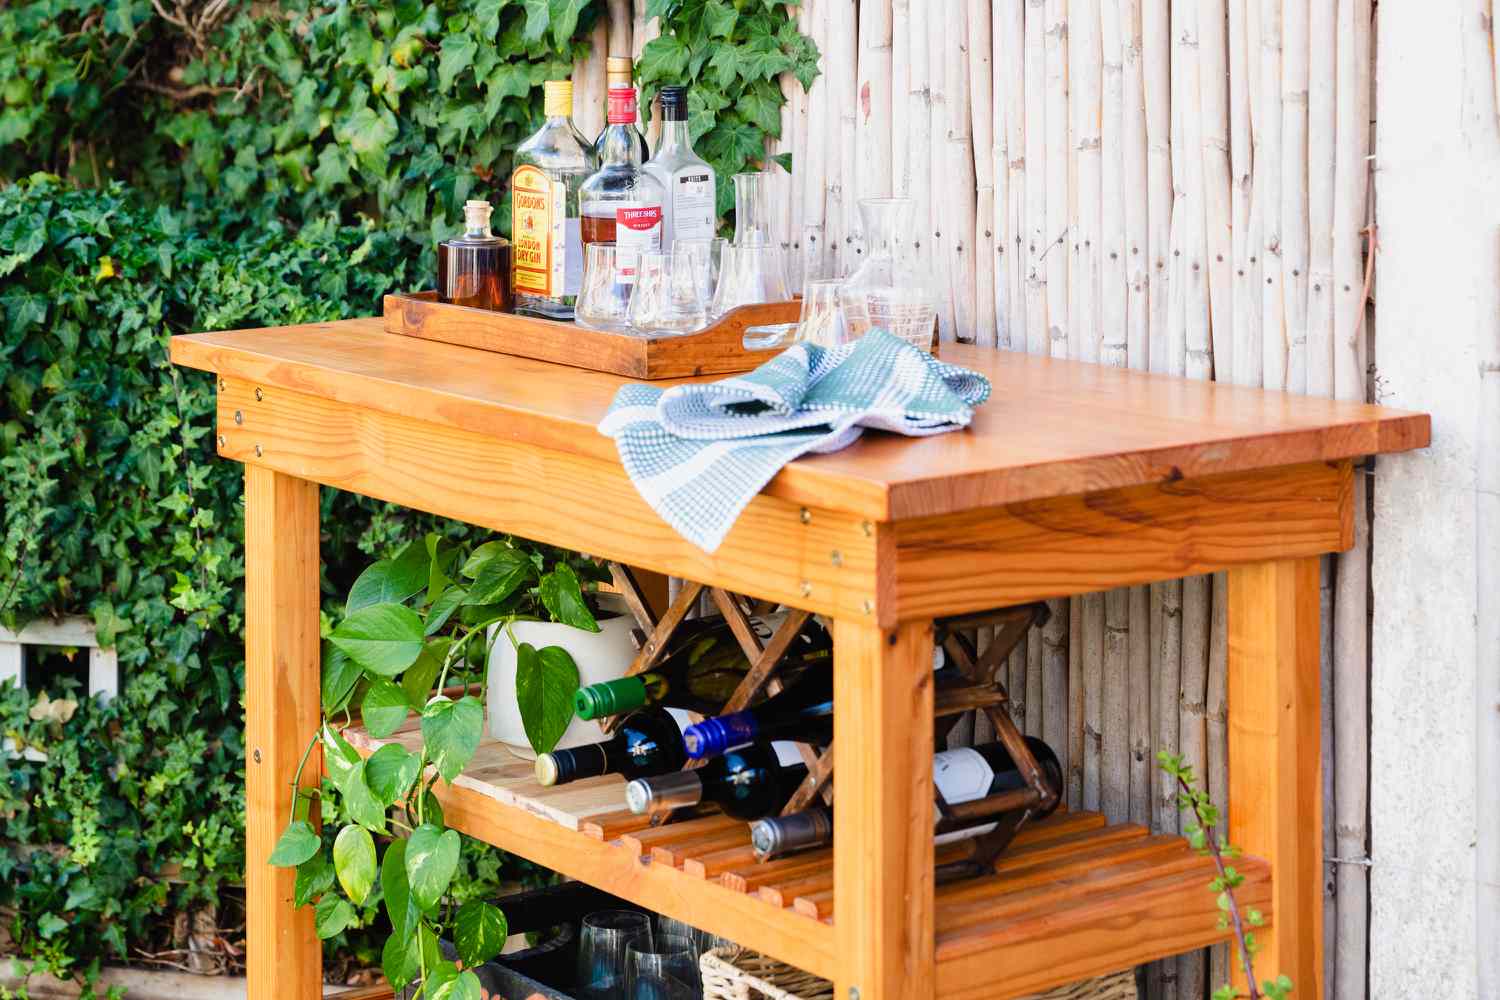 DIY carrito de bar de madera con botellas de licor y vino cerca de plantas de exterior closeup